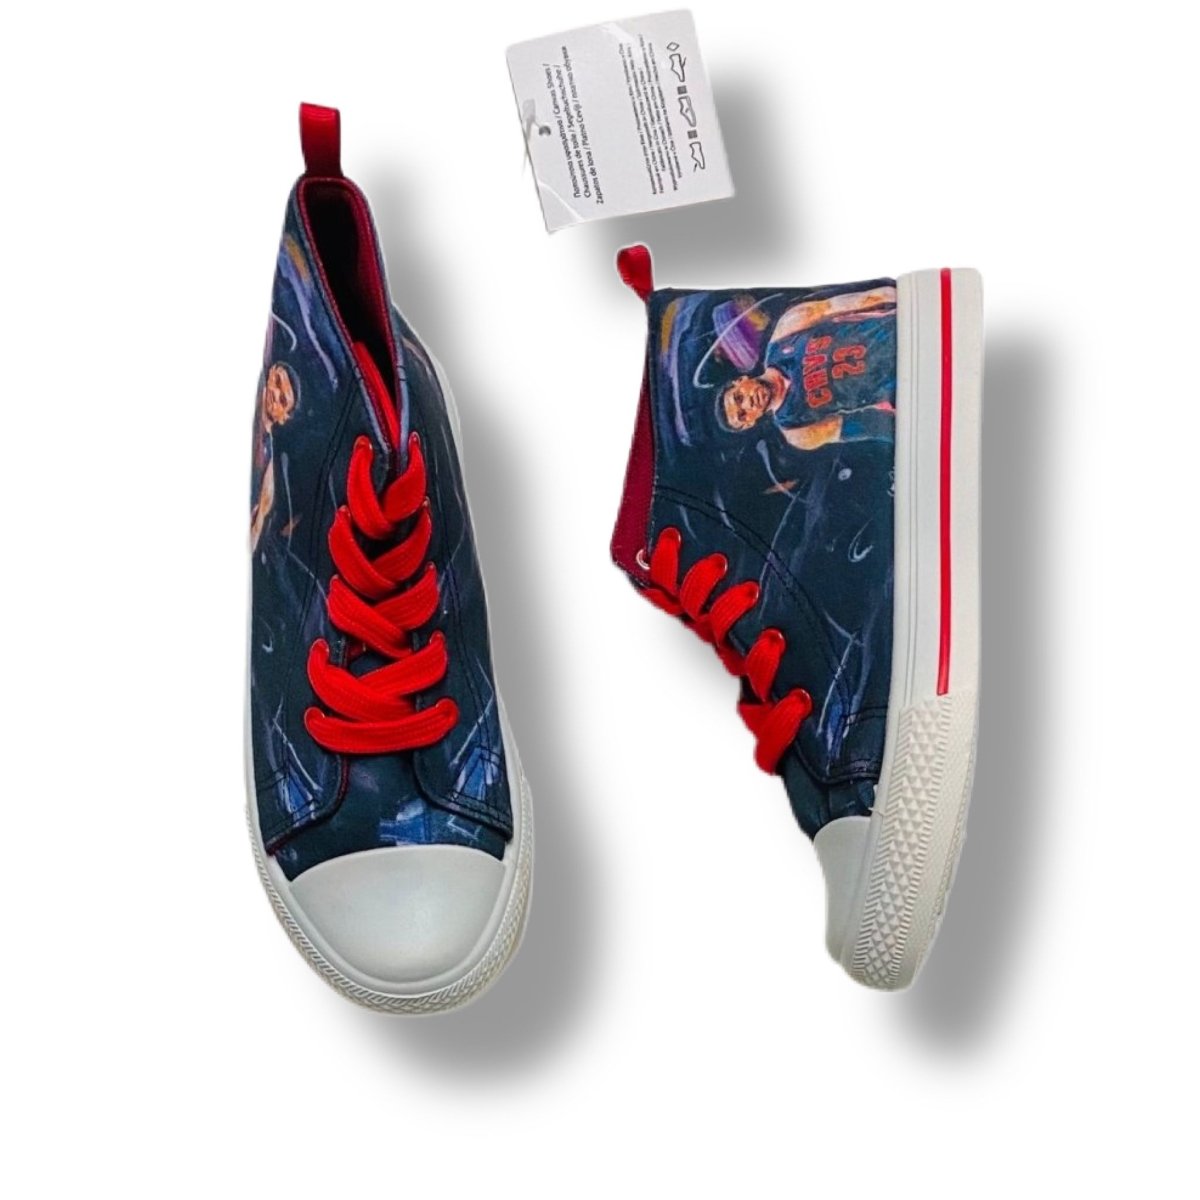 Sneakers Cavs Lebron James - Mstore016 - sneaker bimbo - Avengers